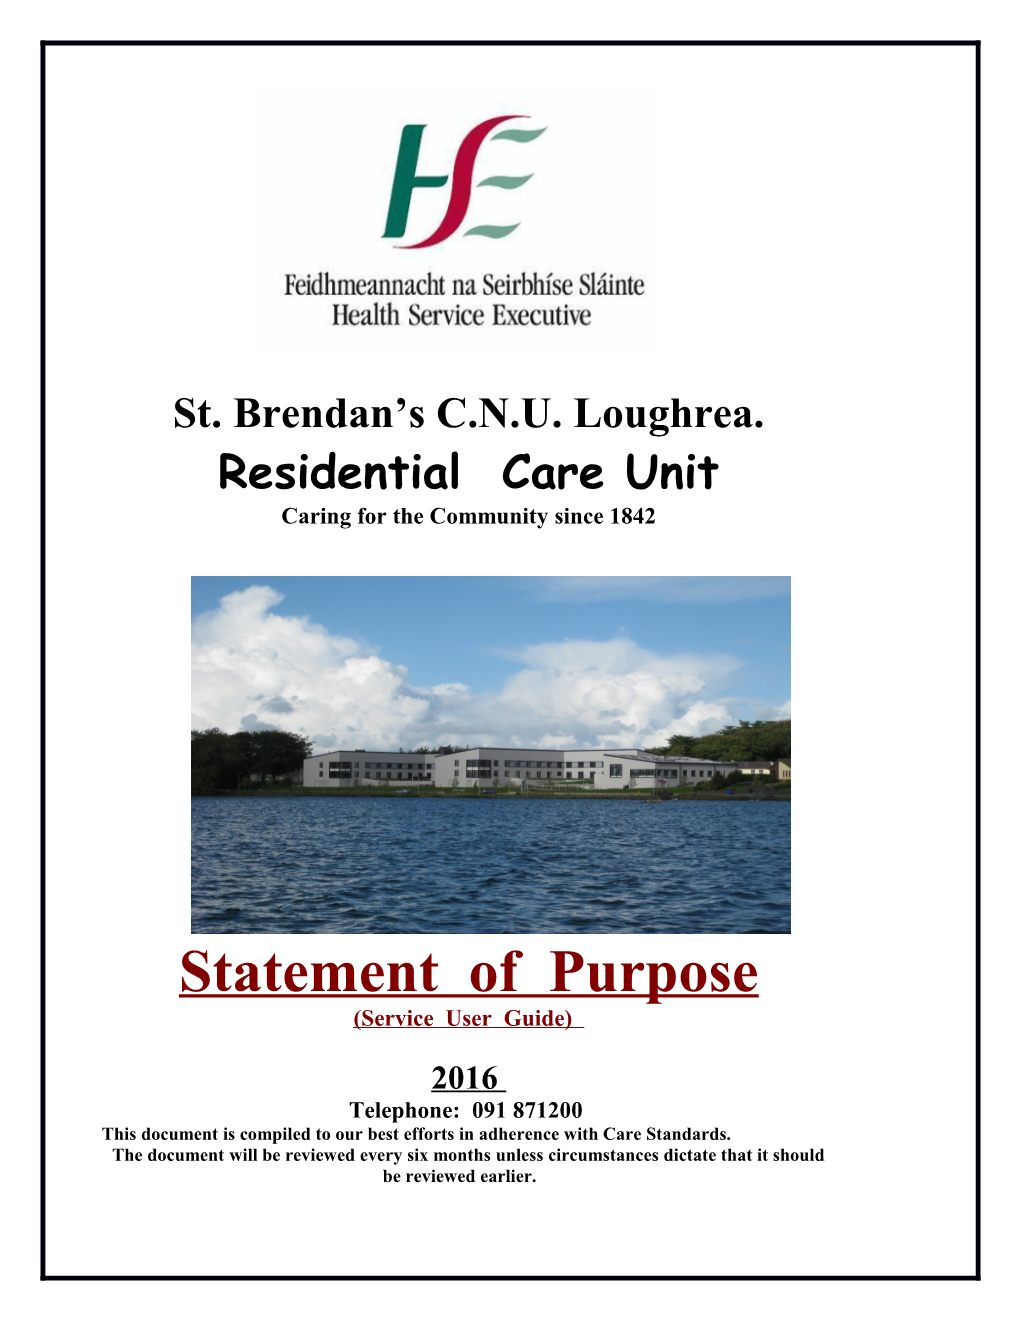 St. Brendan S C.N.U. Loughrea